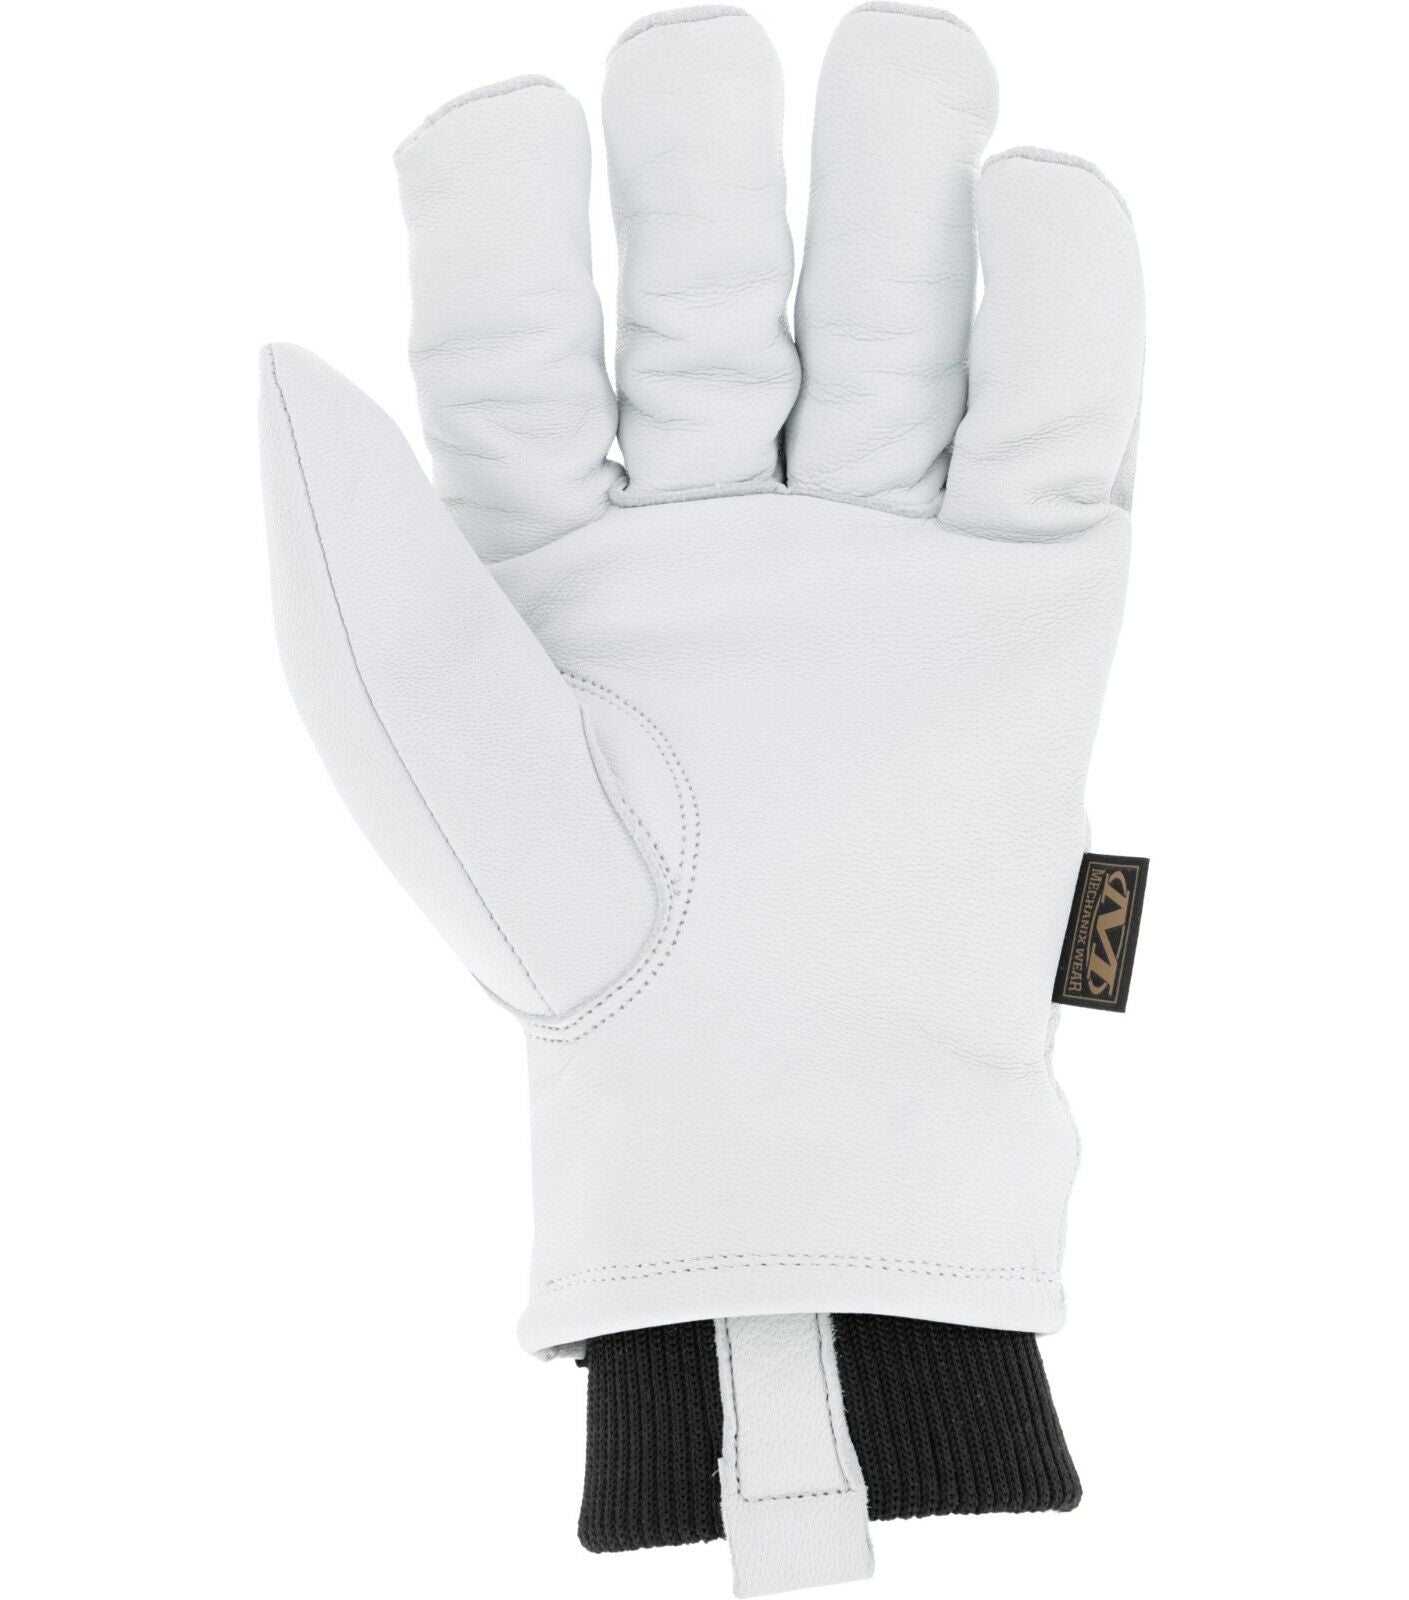 2 PACK MECHANIX WEAR ColdWork Durahide Insulated Driver Winter Gloves, White/Black